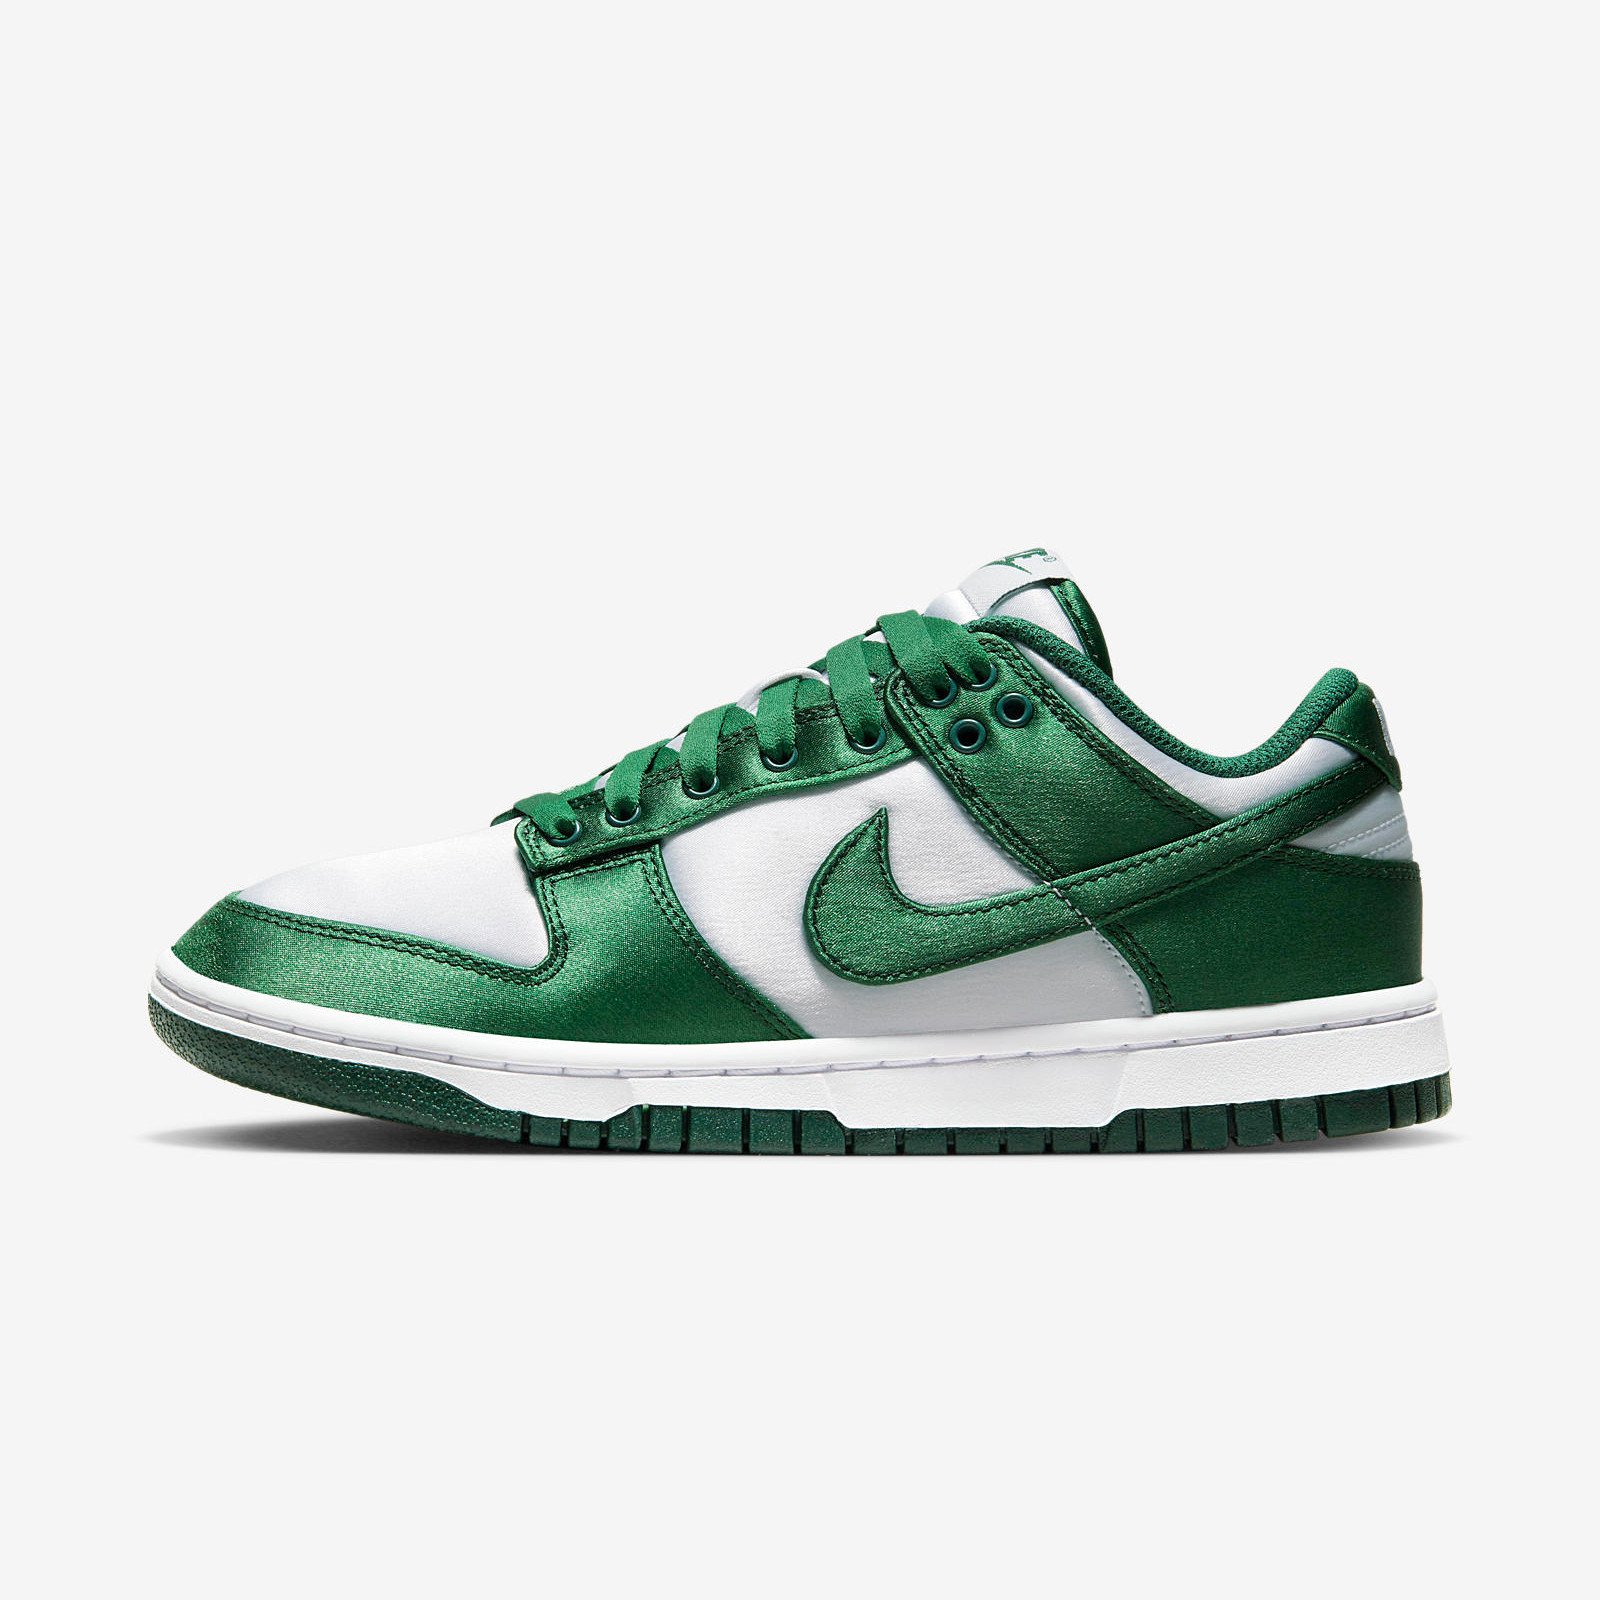 Nike Dunk Low
Green / White